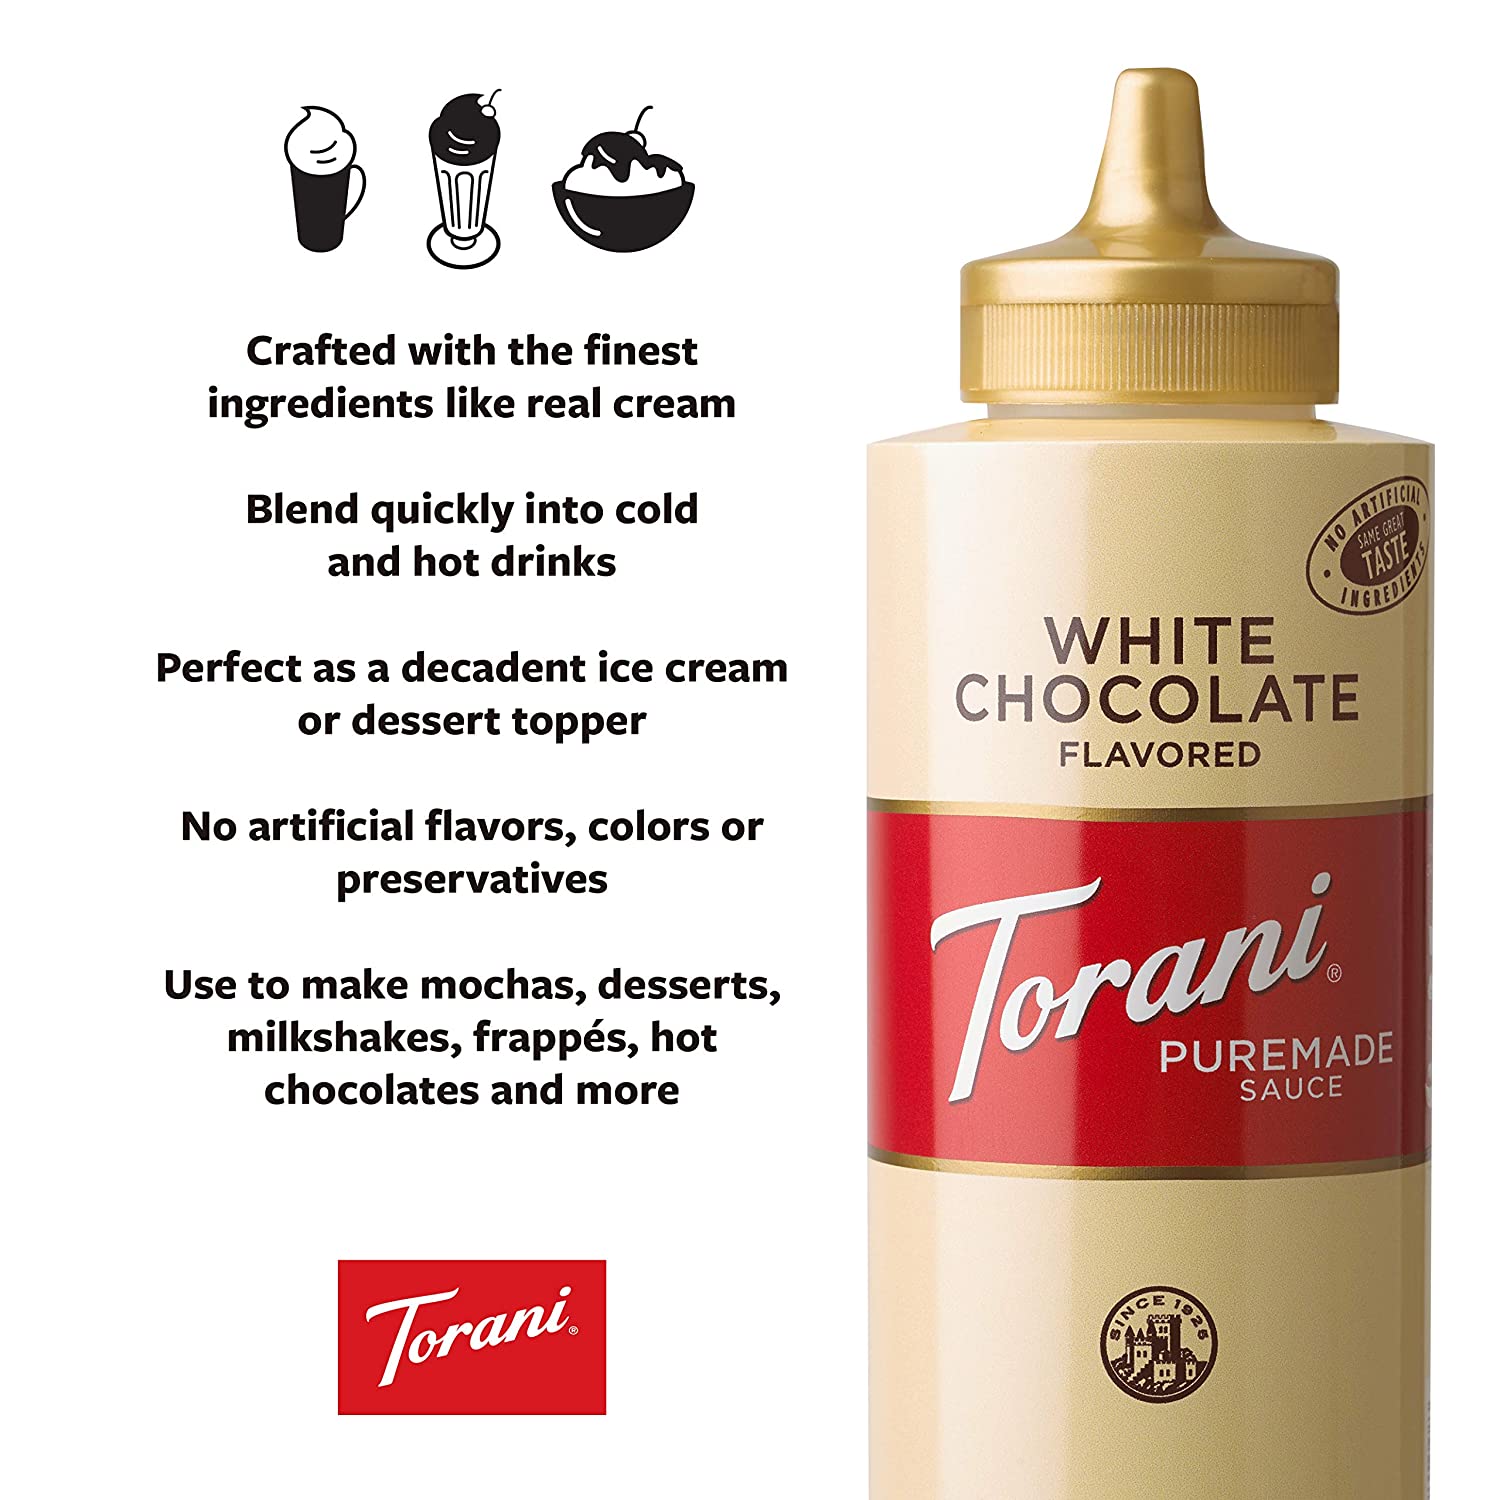 Torani Puremade White Chocolate Sauce: 16oz Bottle